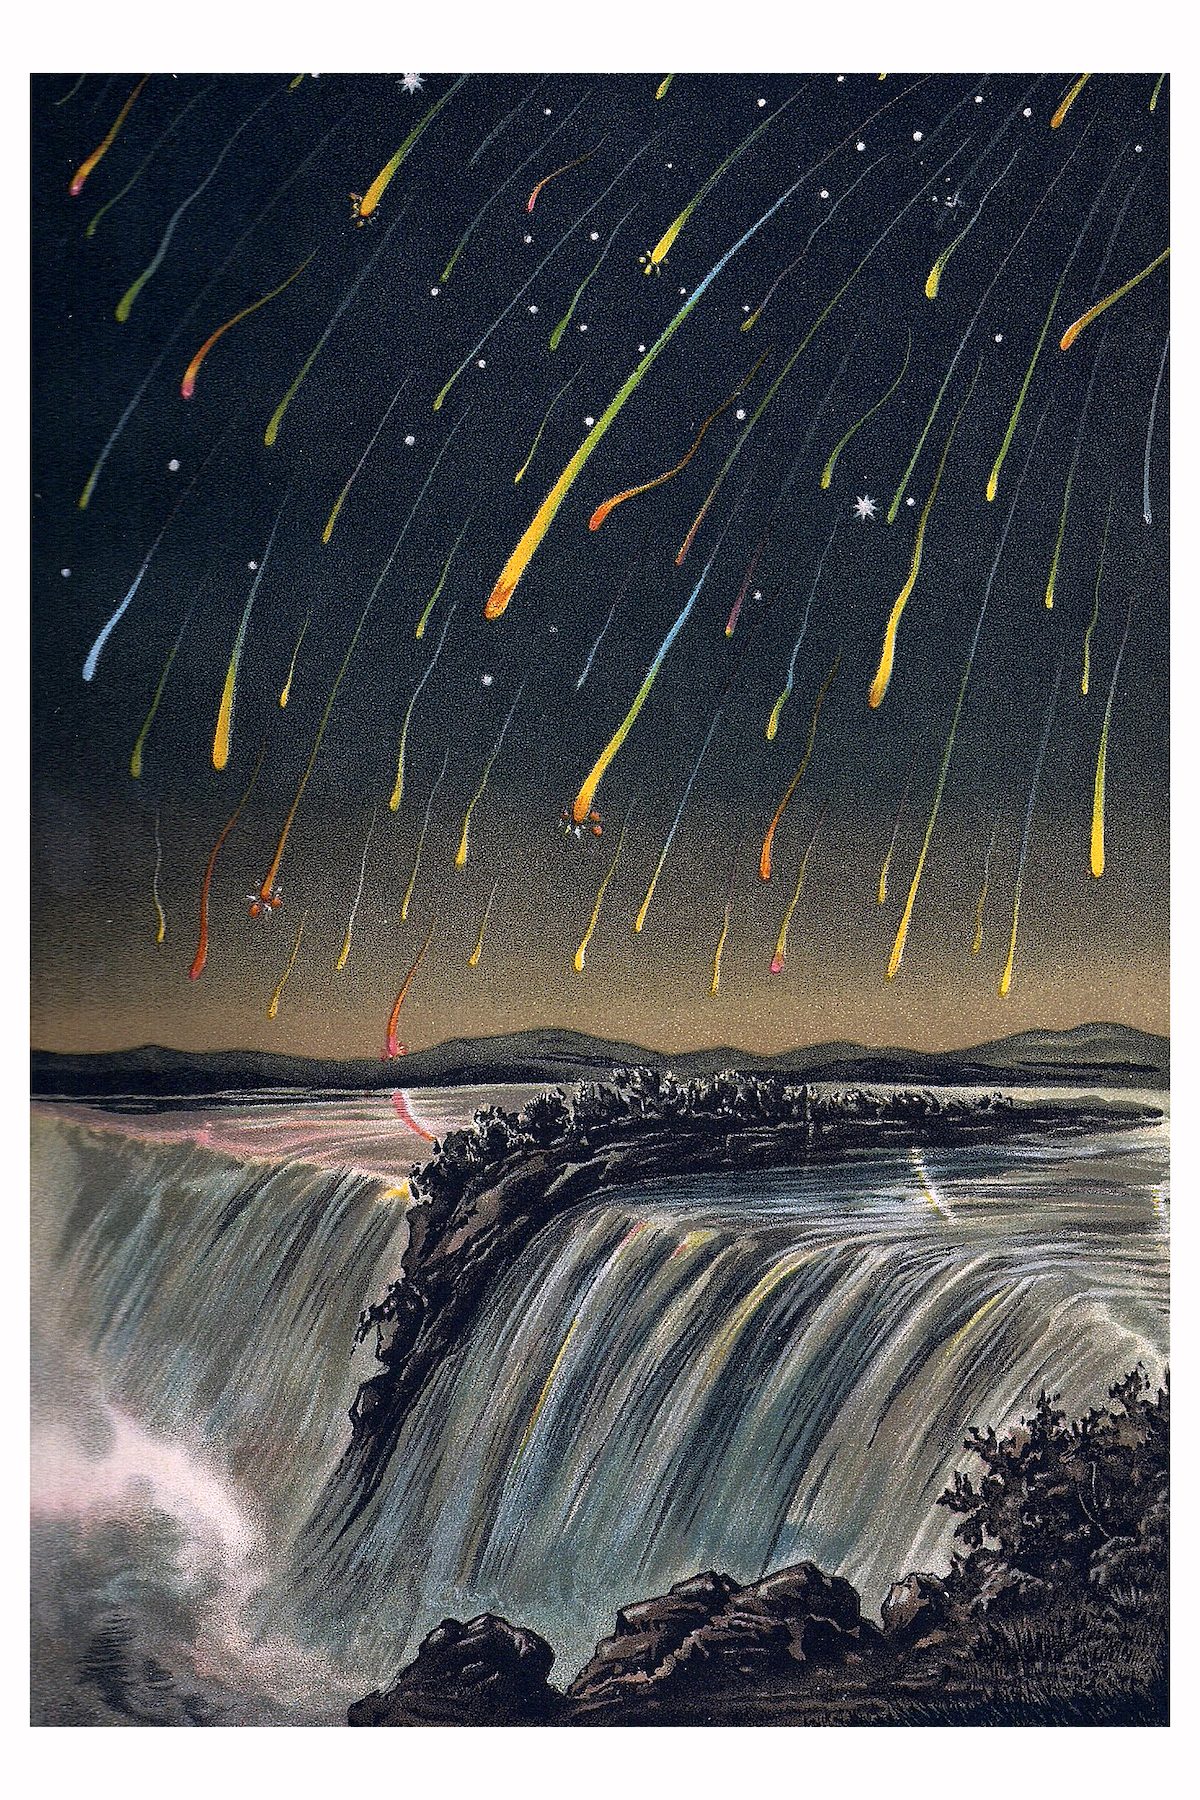 Leonid meteor shower over Niagara FallsIllustration from Edmund Weiss, Bilder-Atlas der Sternenwelt [Image atlas of the star world], Stuttgart, 1892 via Smithsonian (3)_1